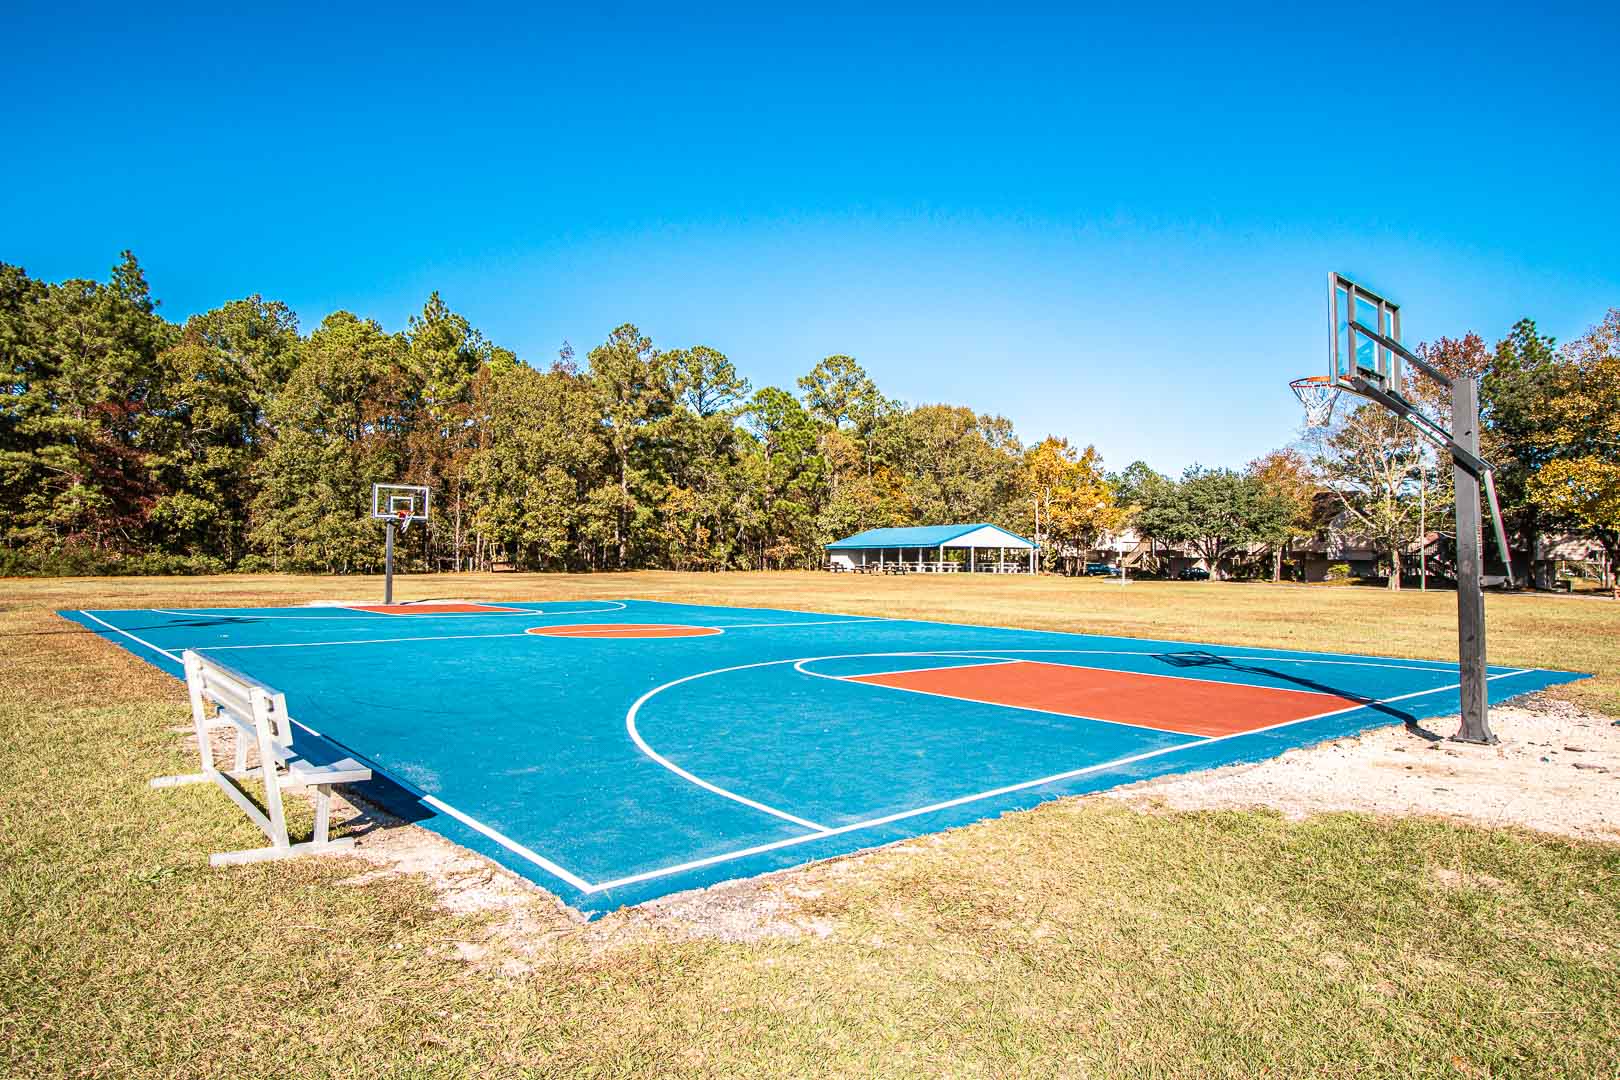 Full size outdoor basketball court at VRI's Sandcastle Village in New Bern, North Carolina.